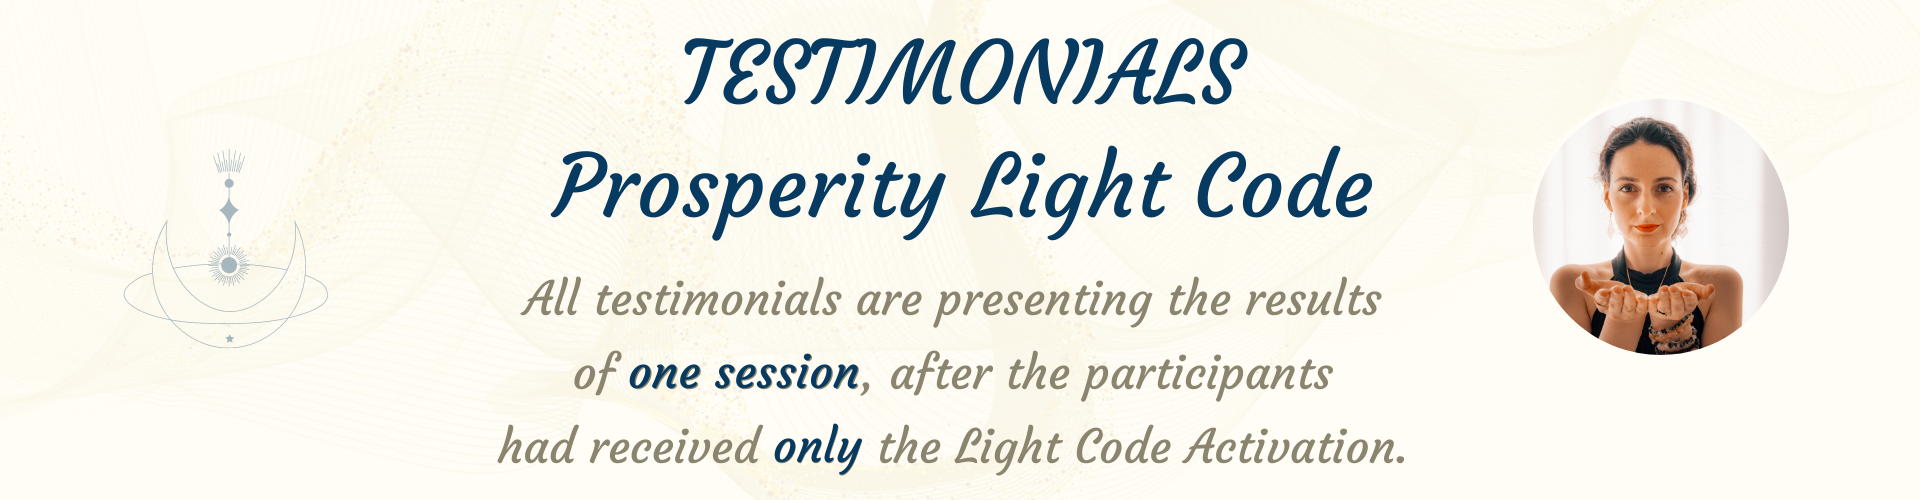 Testimonials Prosperity Light Code